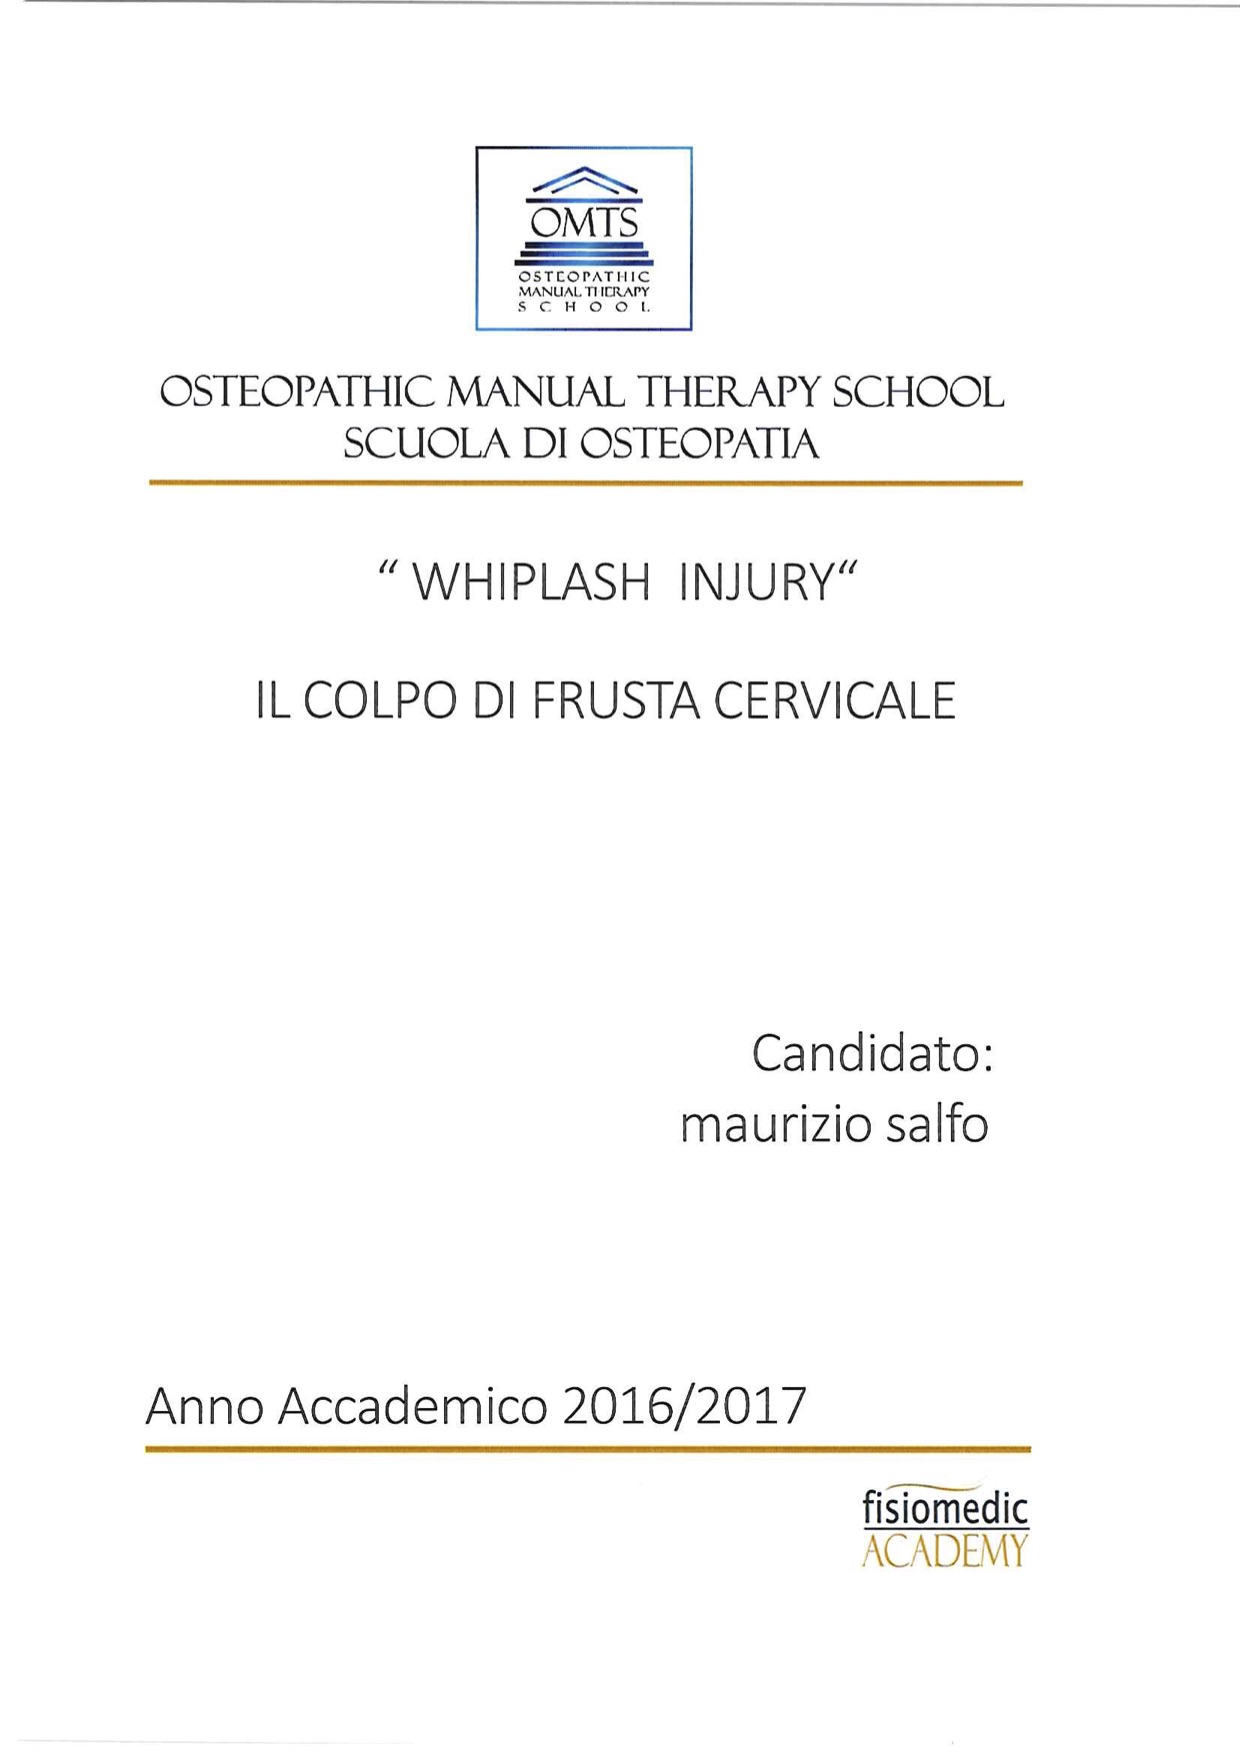 Maurizio Salfo Tesi Diploma Osteopatia 2017